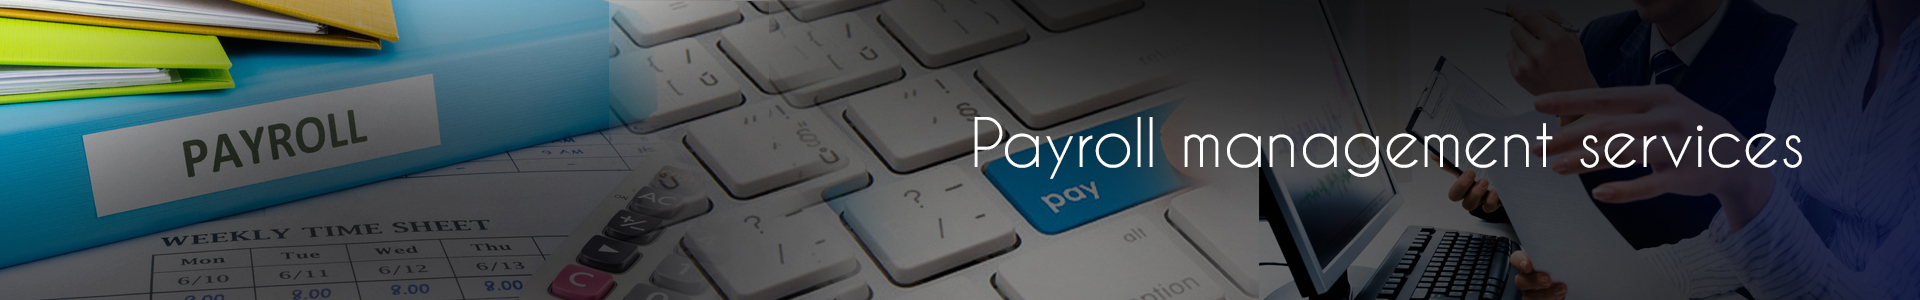 Payroll management services